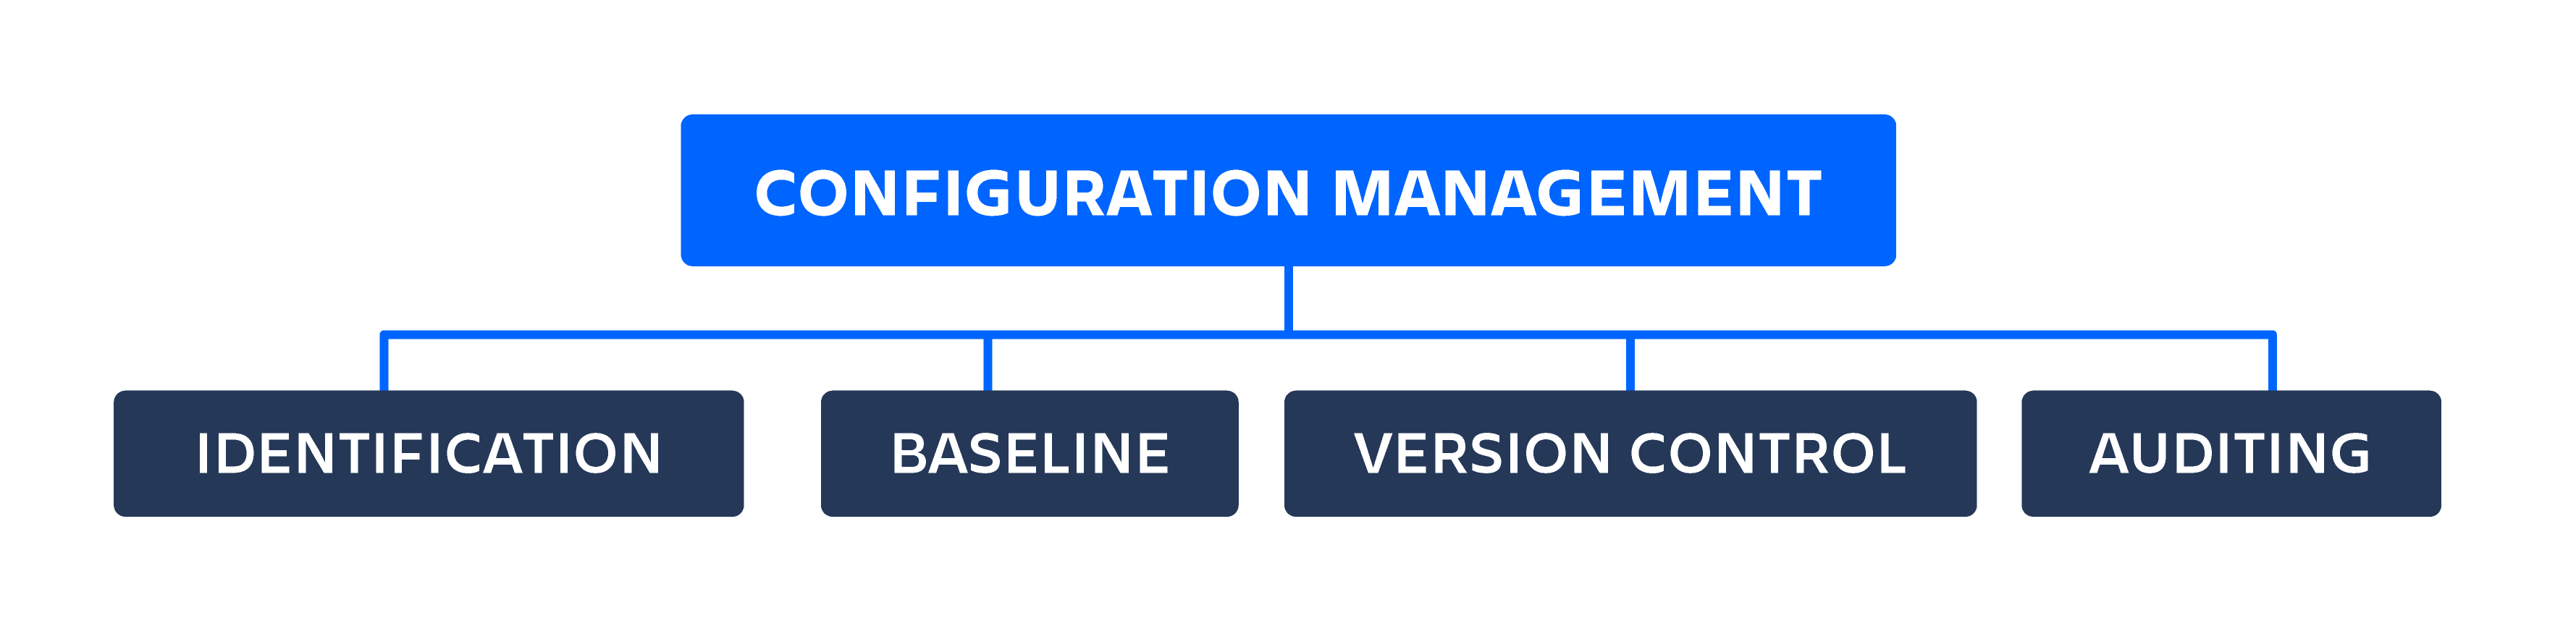 Configuration management diagram